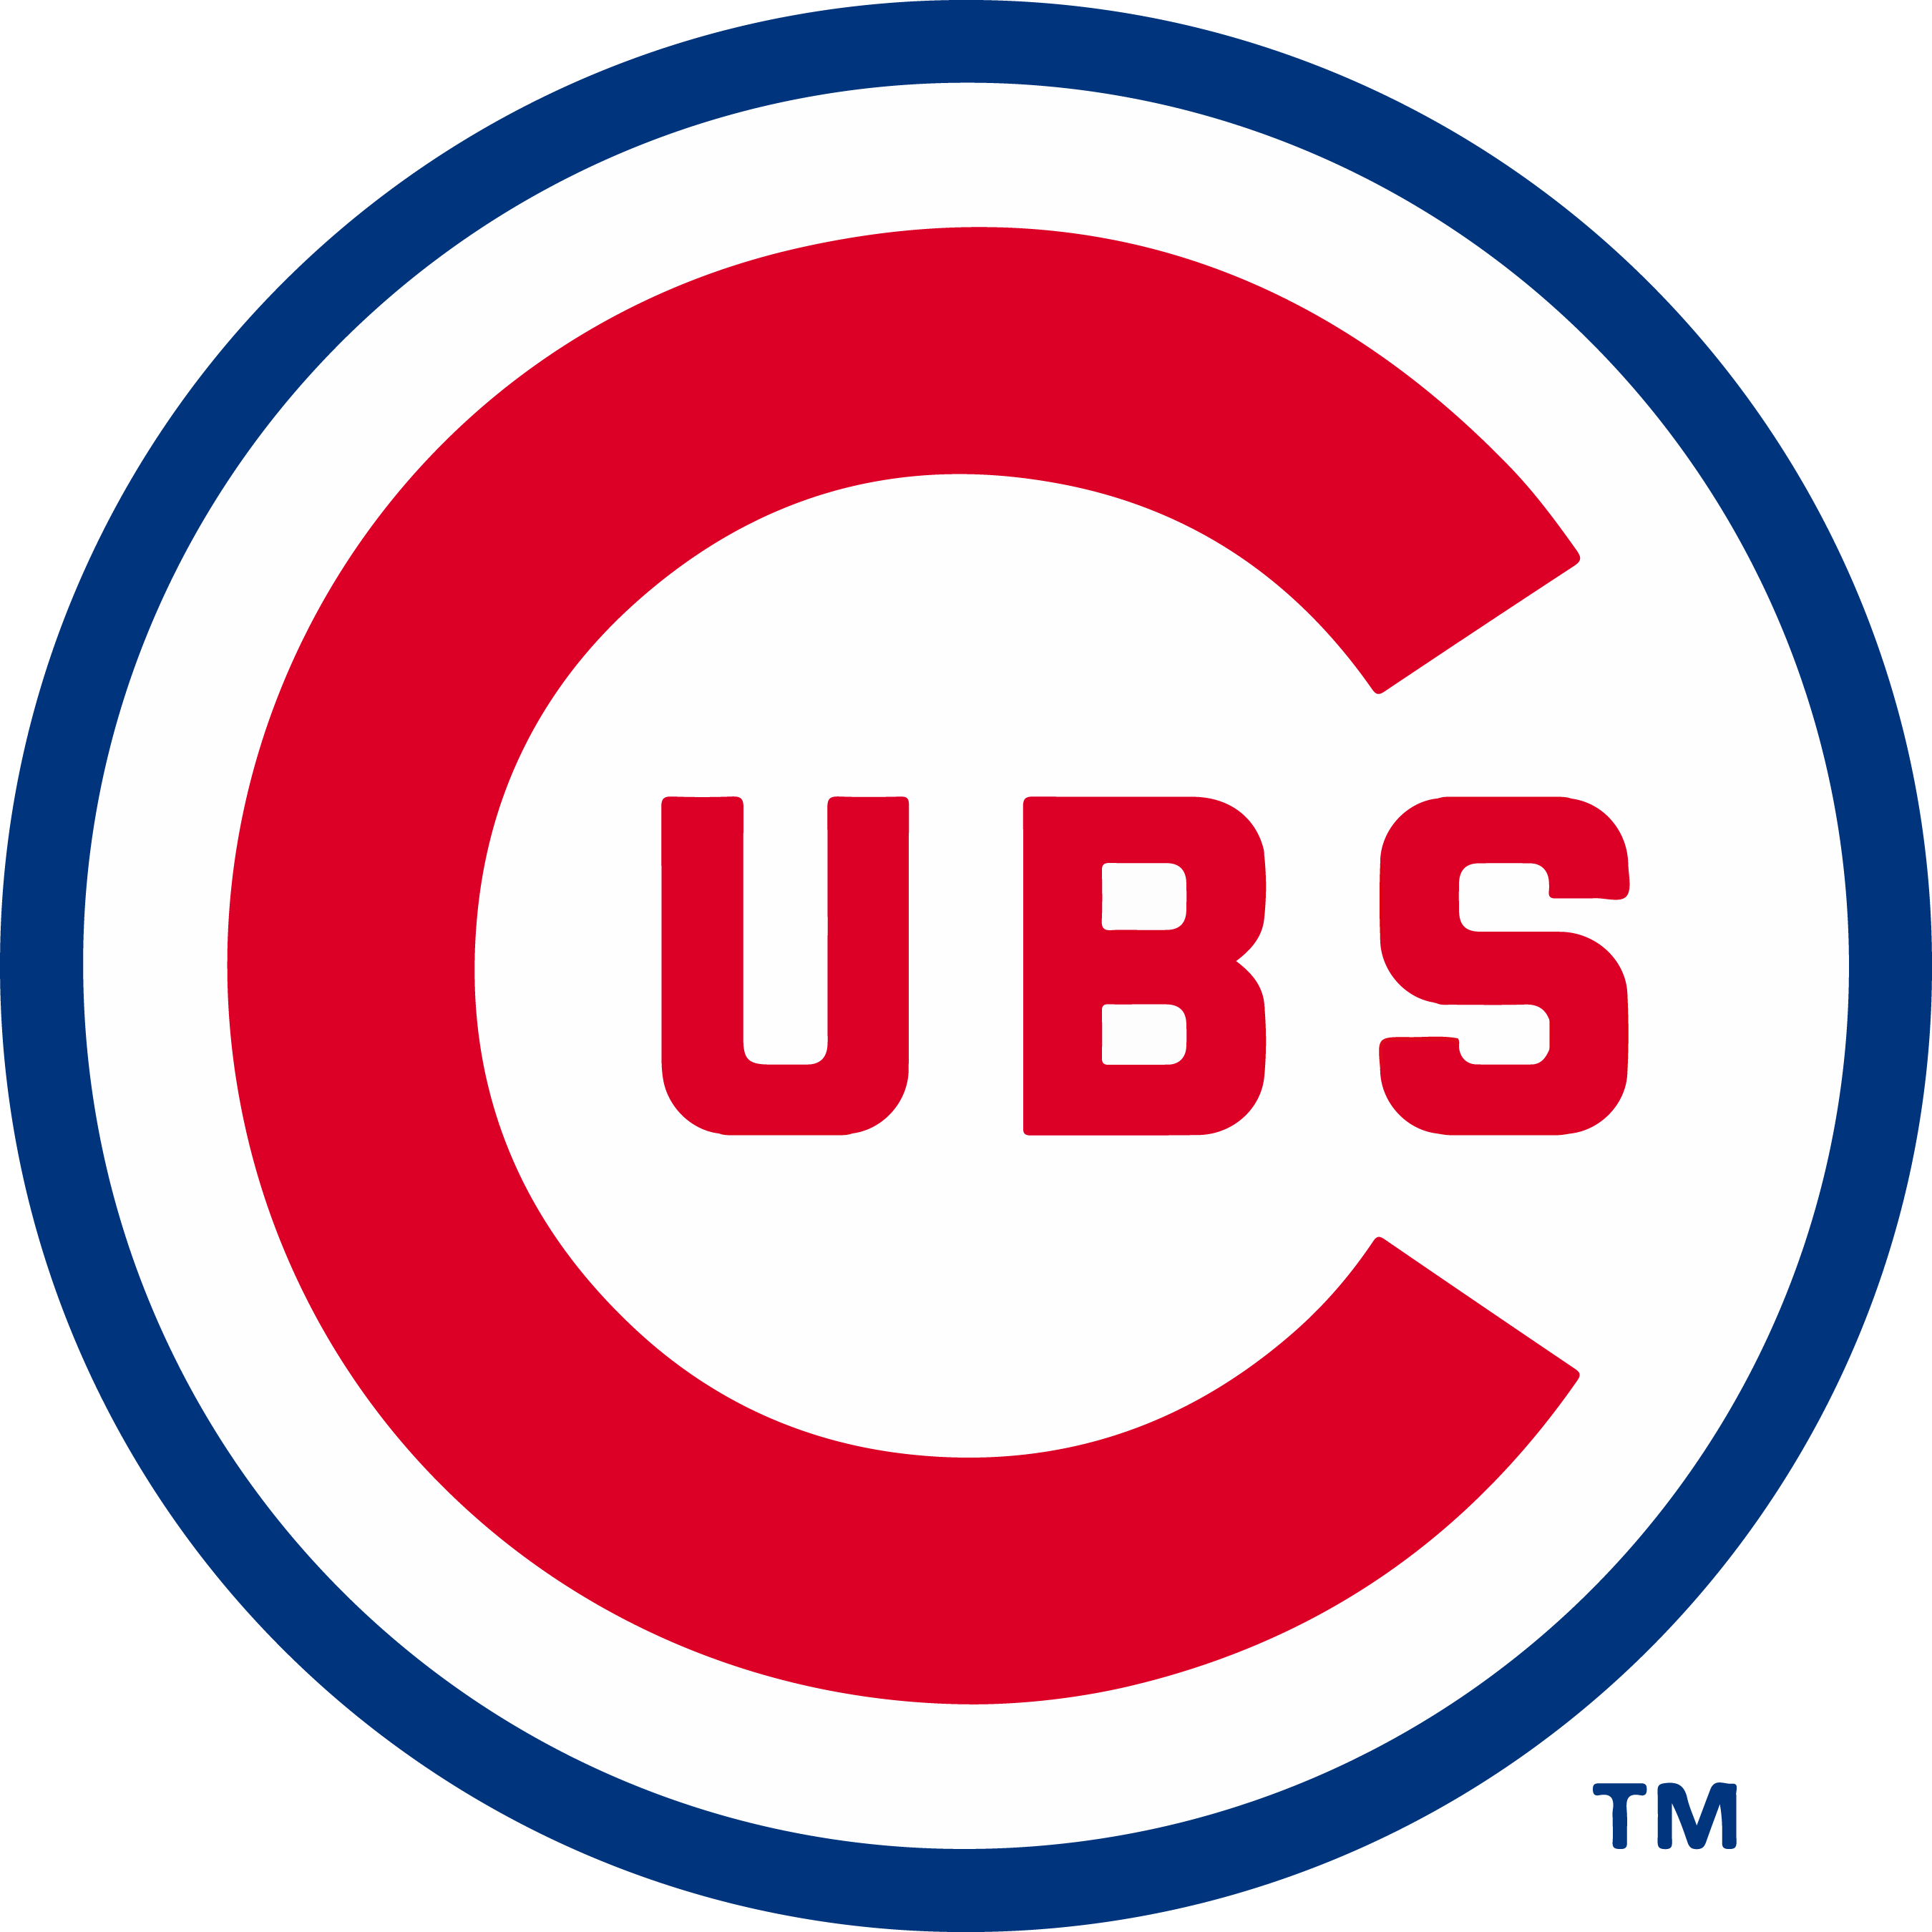 Chicago Cubs Logo PNG Image